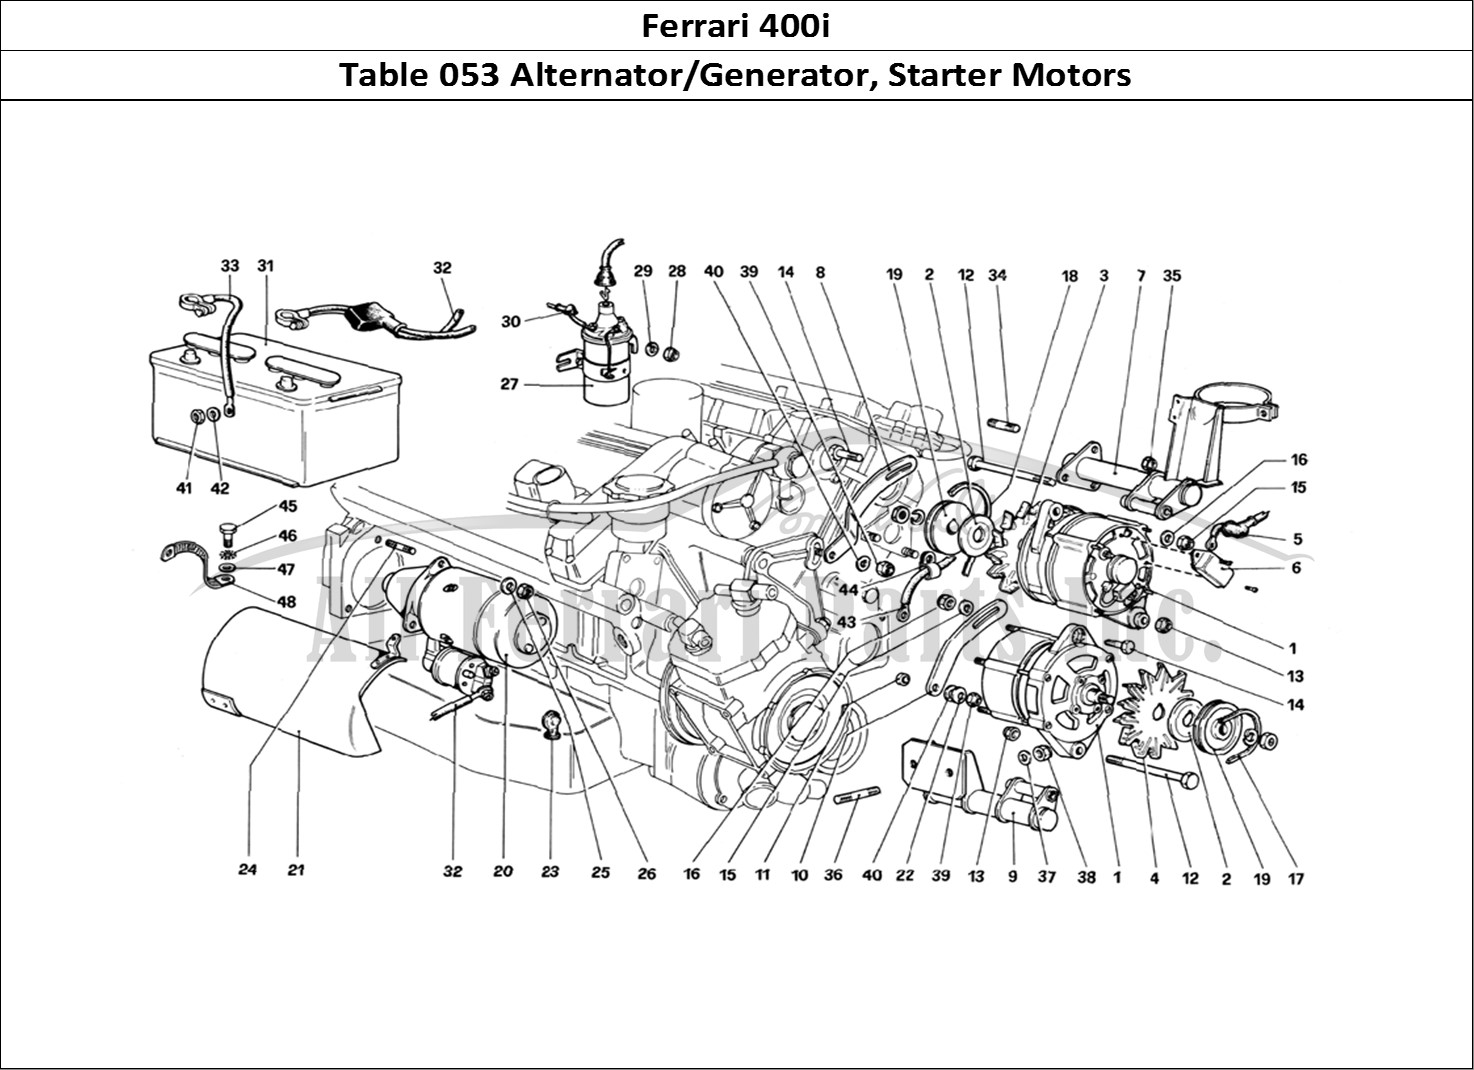 Ferrari Parts Ferrari 400i (1983 Mechanical) Page 053 Current Generators and St